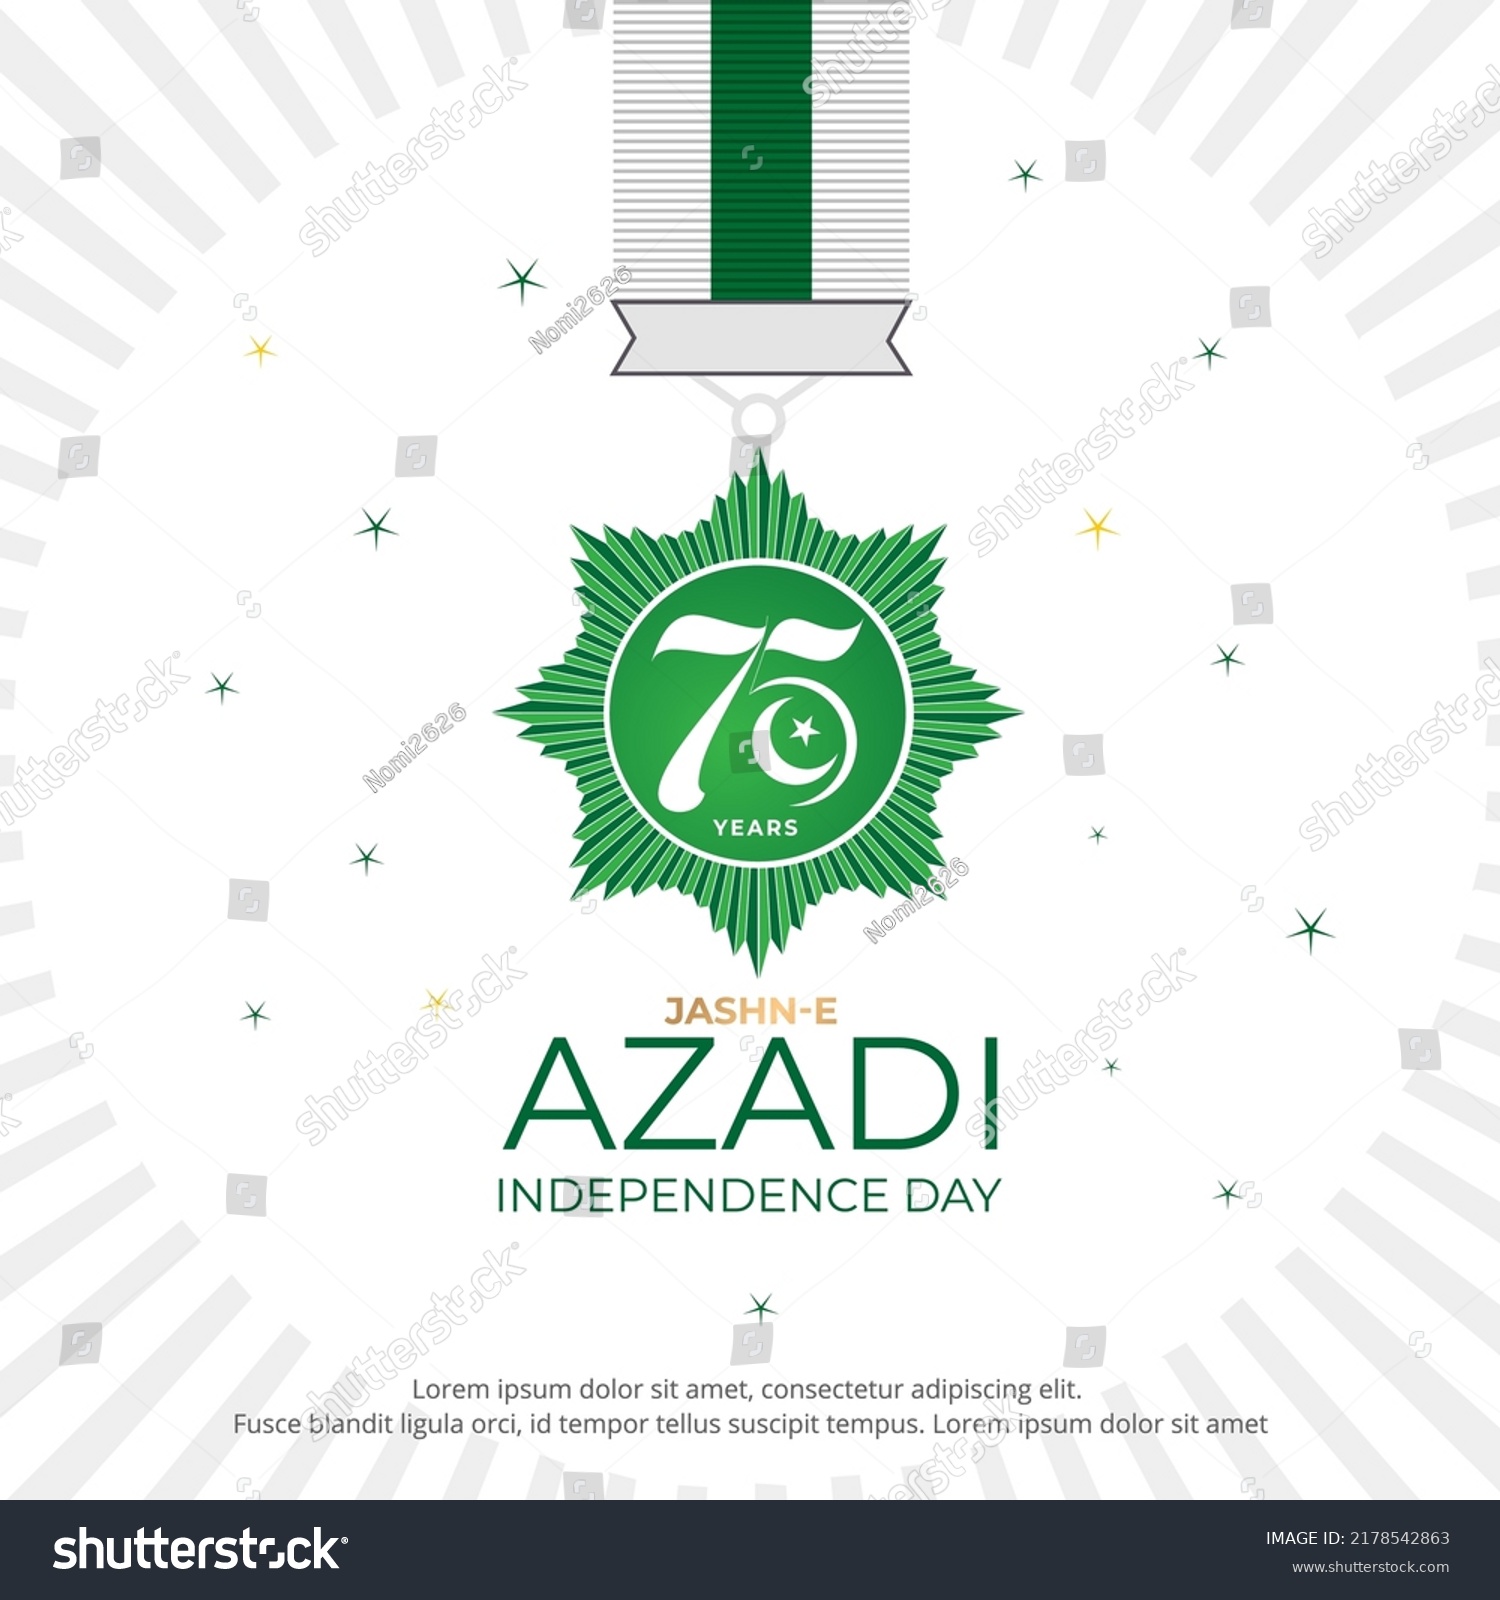 SVG of 75 year badge jashn e azadi 14 august happy independence day.
vector illustration. svg